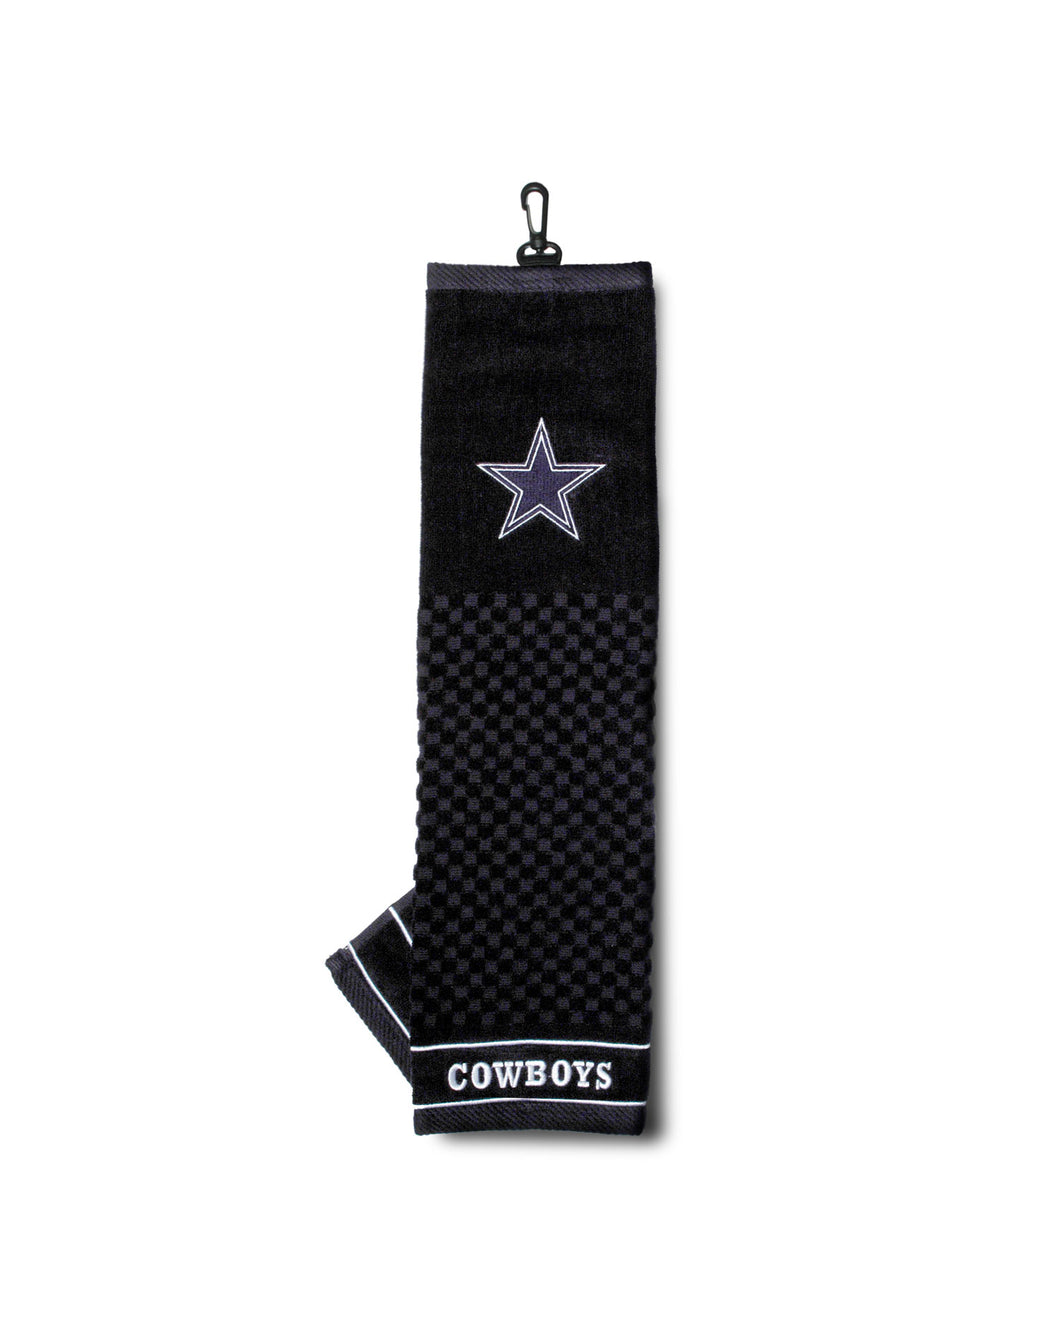 NFL Official Team Crested Tri Fold Golf Towel. Dallas Cowboys.